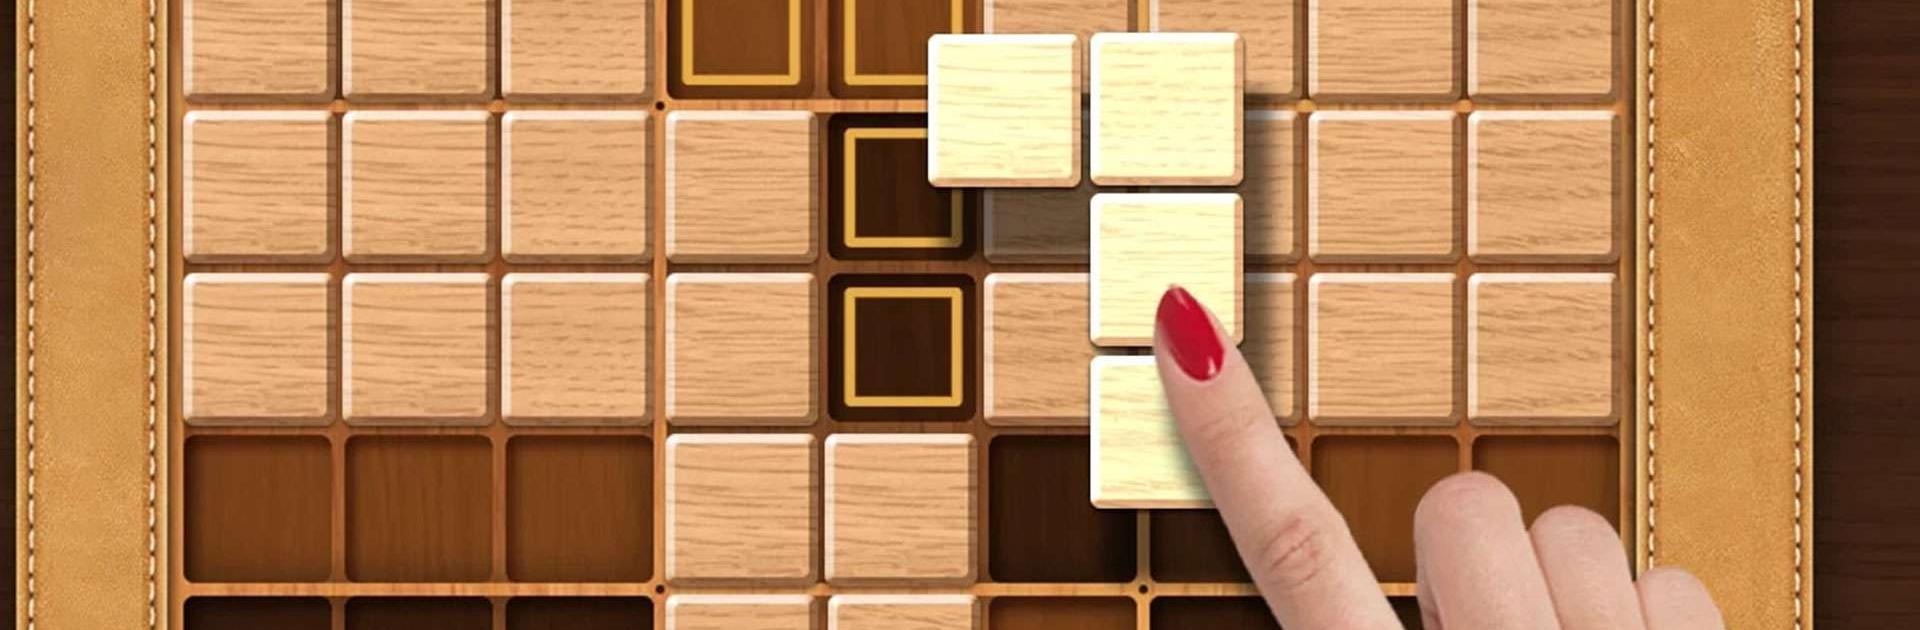 Doge Block : Sudoku-Puzzle